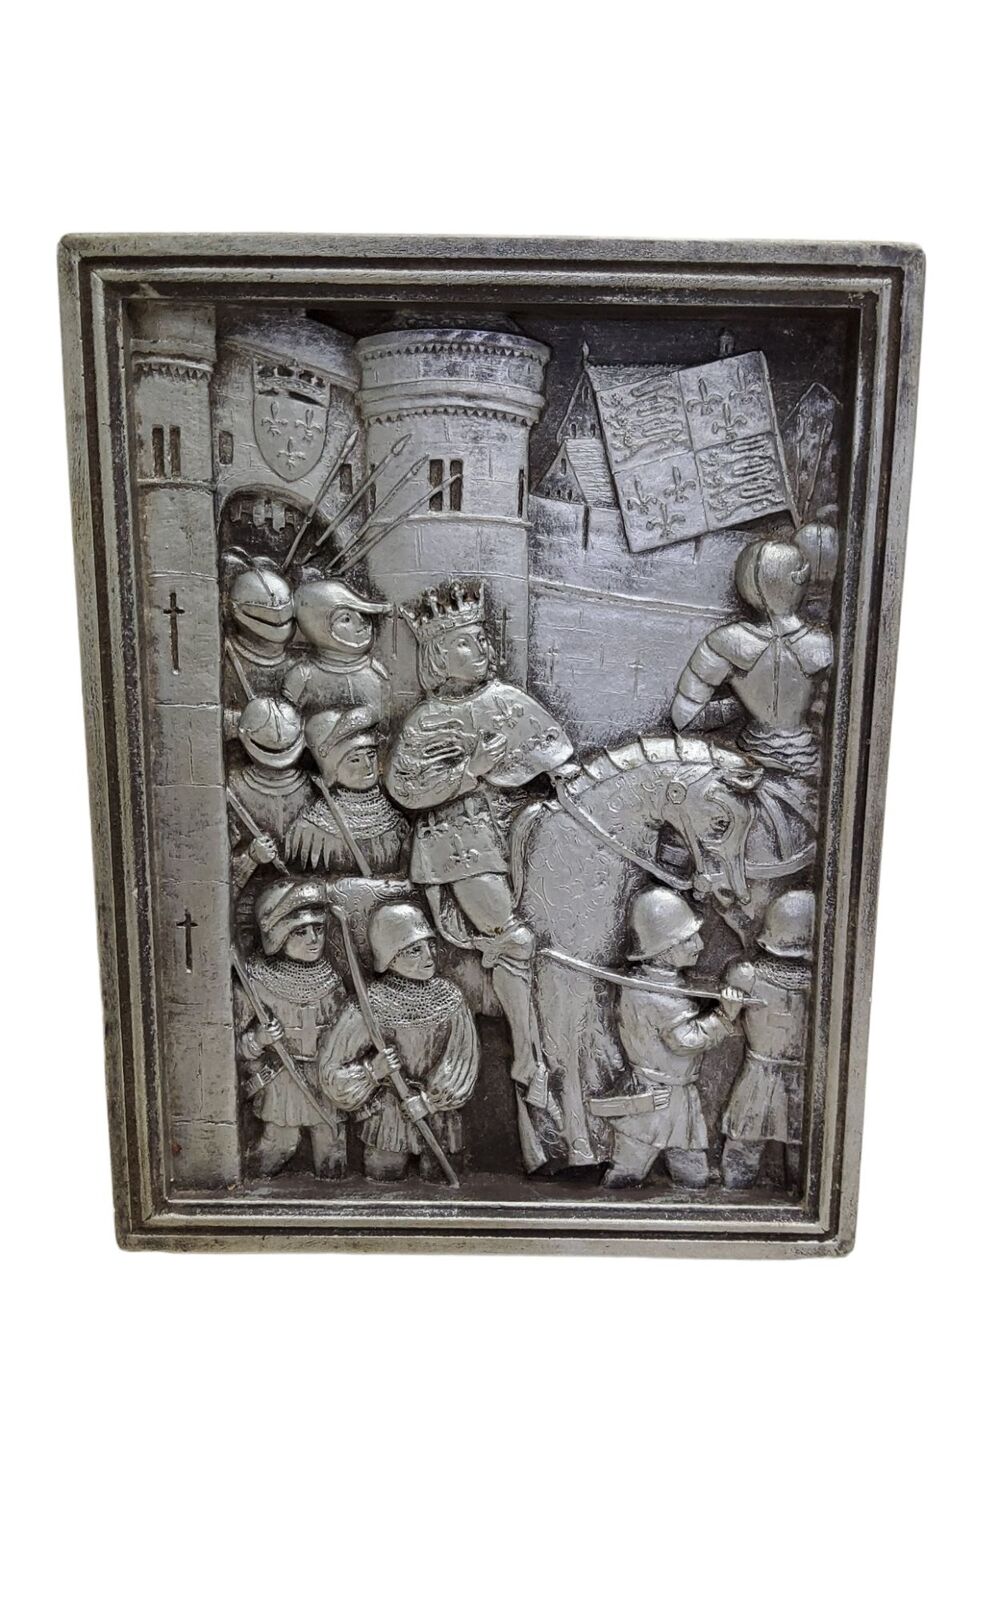 vintage marcus designs chalkware handmade in england crusades wall plaque.